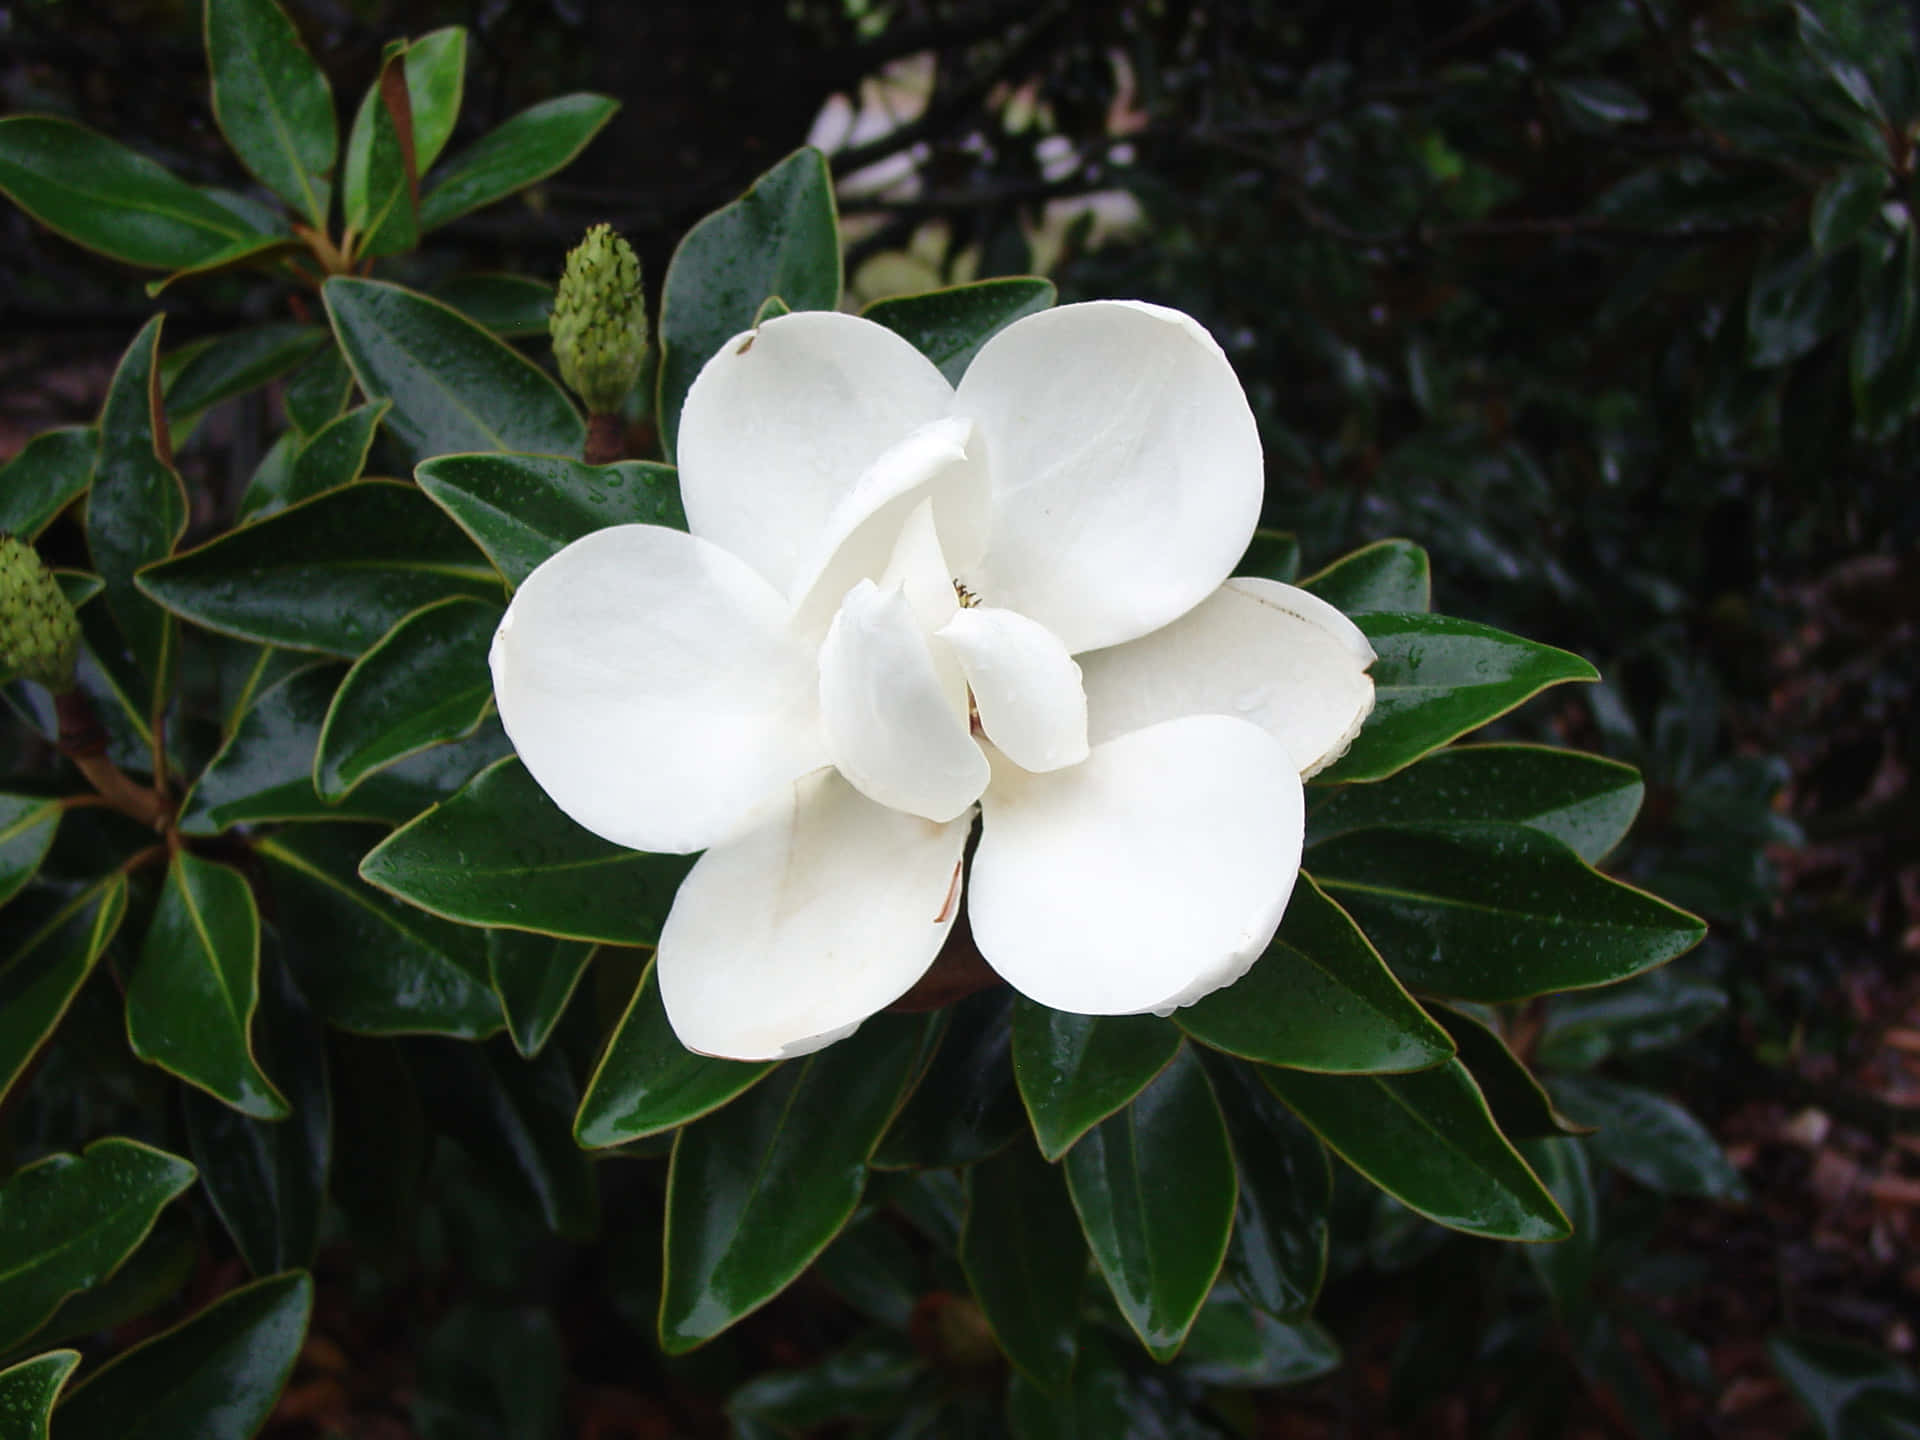 Magnolia Blooms, Adding a Splash of Color